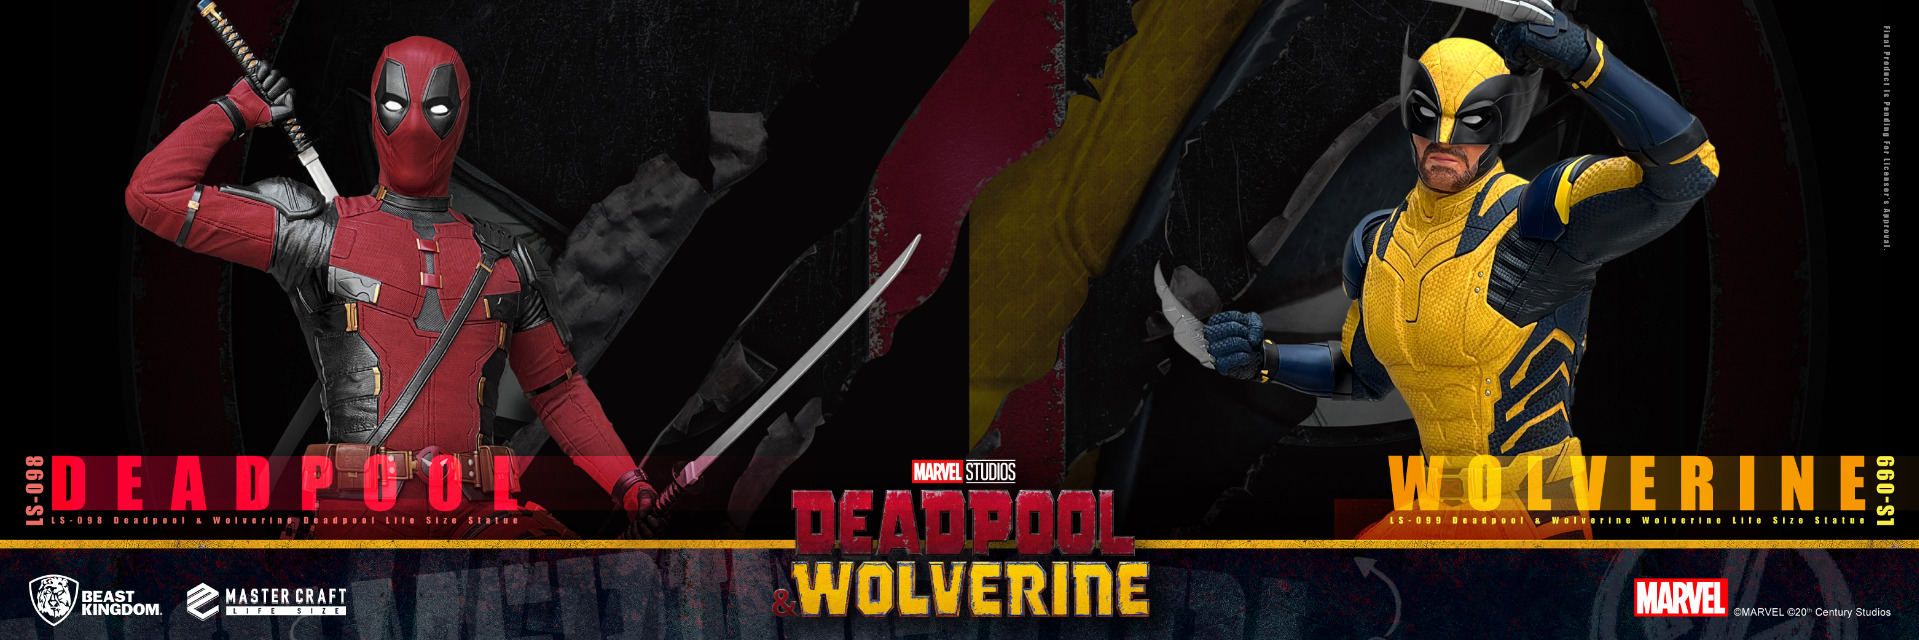 LS-098 Deadpool & Wolverine Deadpool Life Size Statue, LS-099 Deadpool & Wolverine Wolverine Life Size Statue